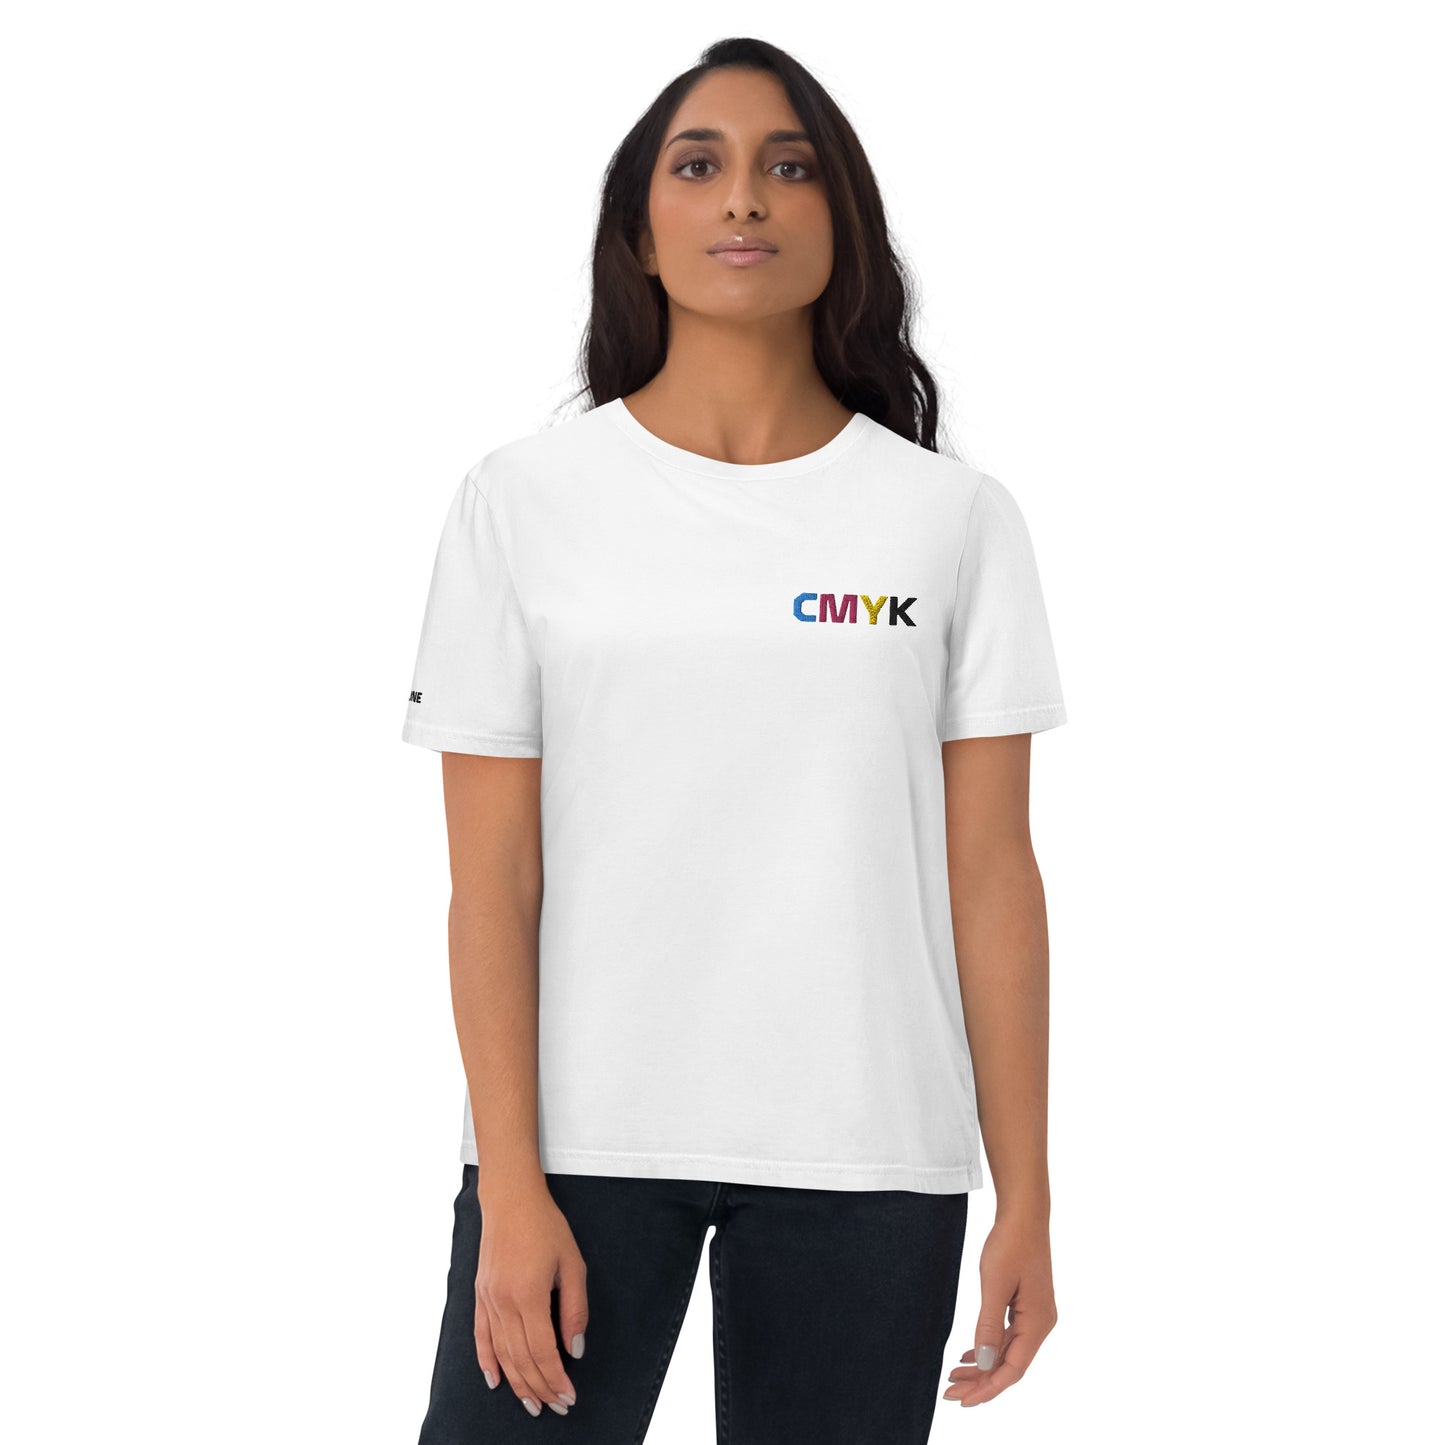 CMYK Embroidered Unisex organic cotton t-shirt